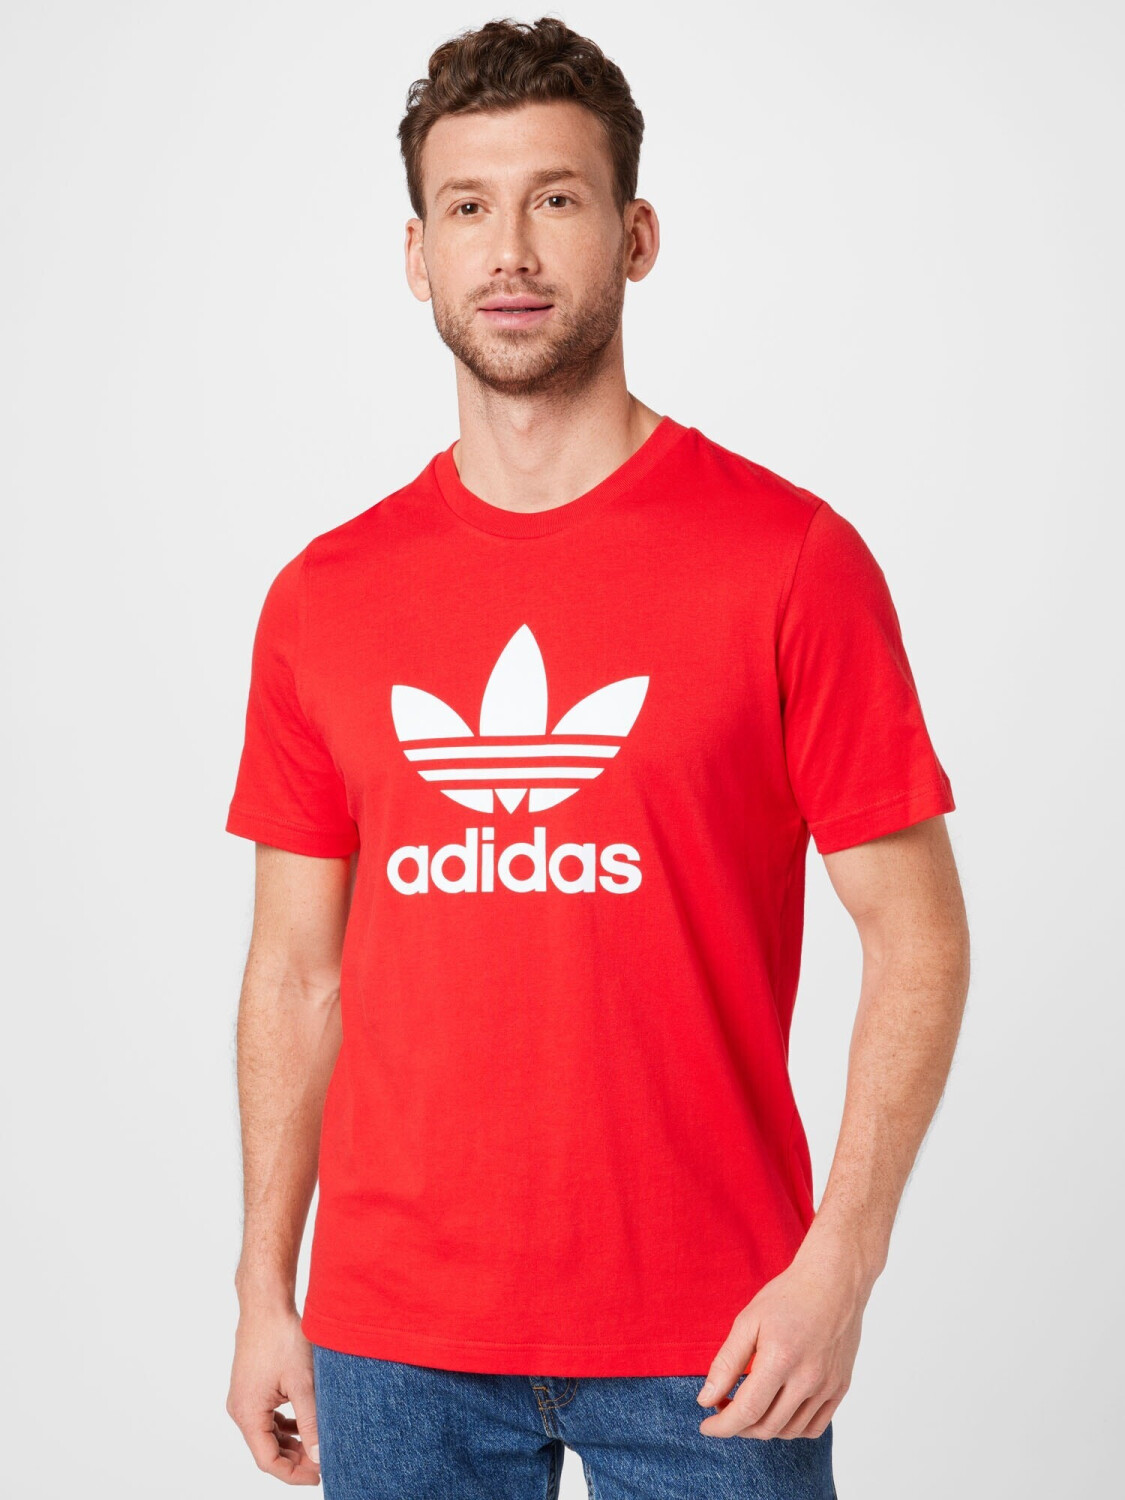 Adidas Adicolor Classics Trefoil T-Shirt Preisvergleich | red/white vivid € 21,00 ab bei